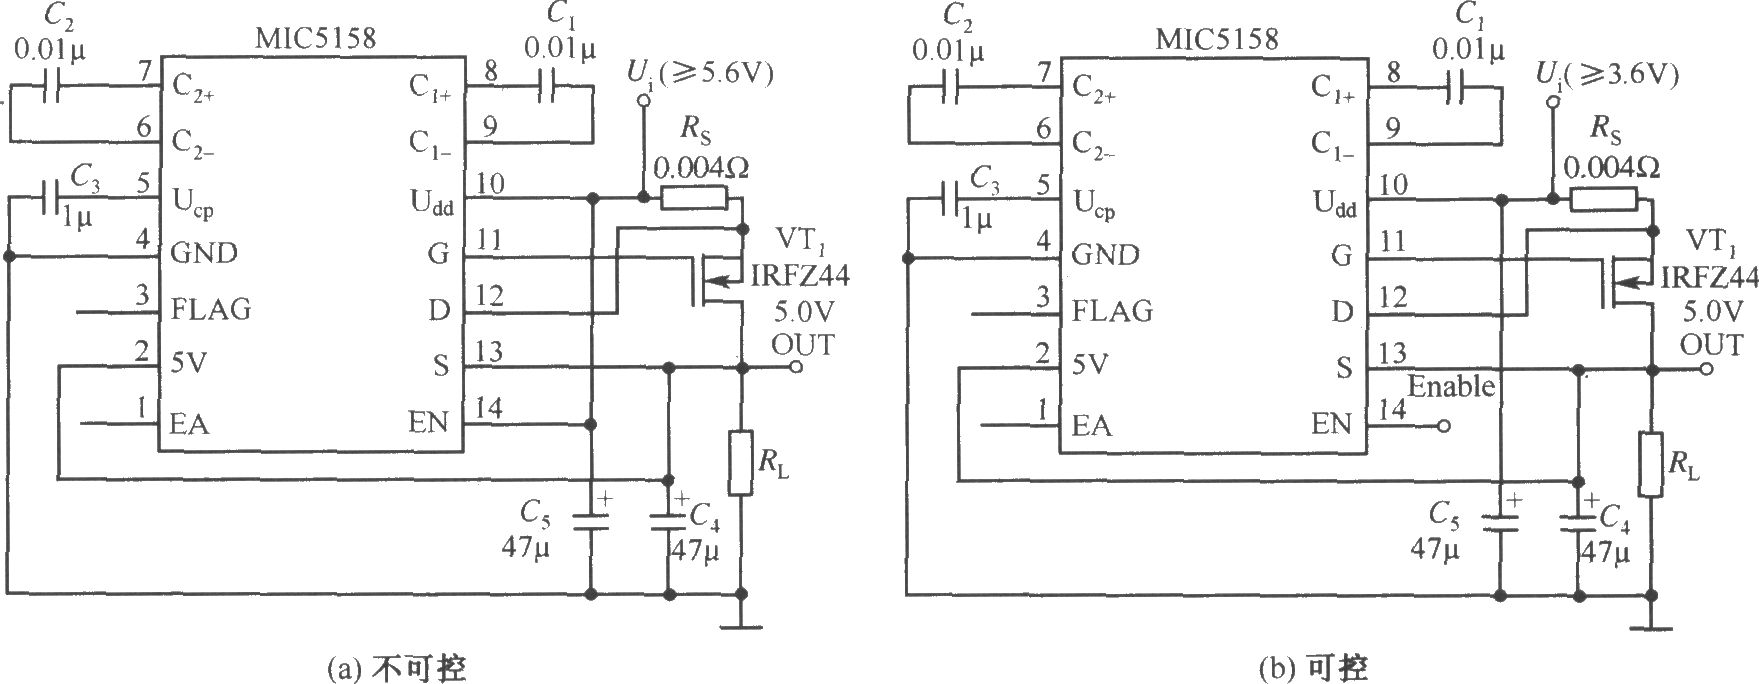 MIC5158构成的固定5V输出的线性稳压器电路